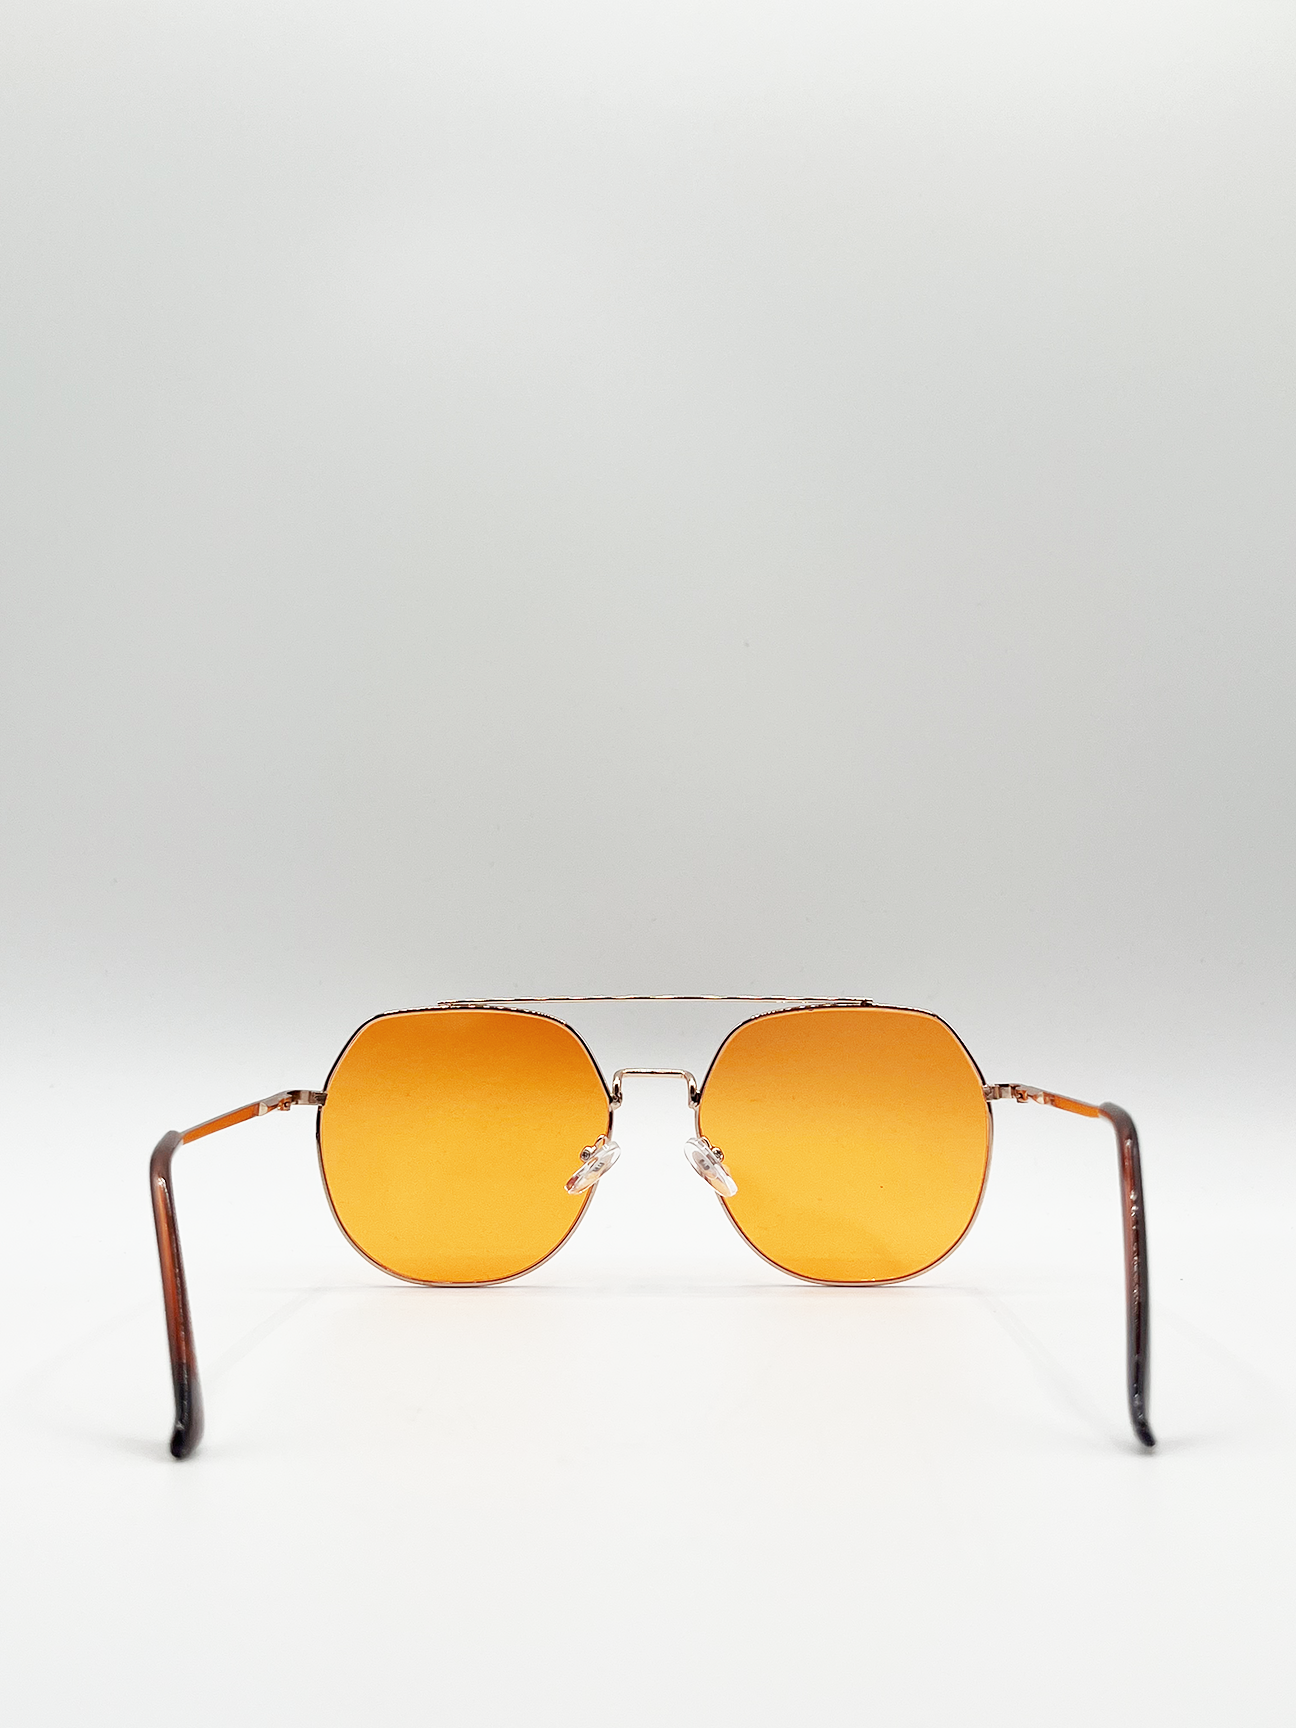 Oversized Aviator Style Sunglasses with Orange Lenses